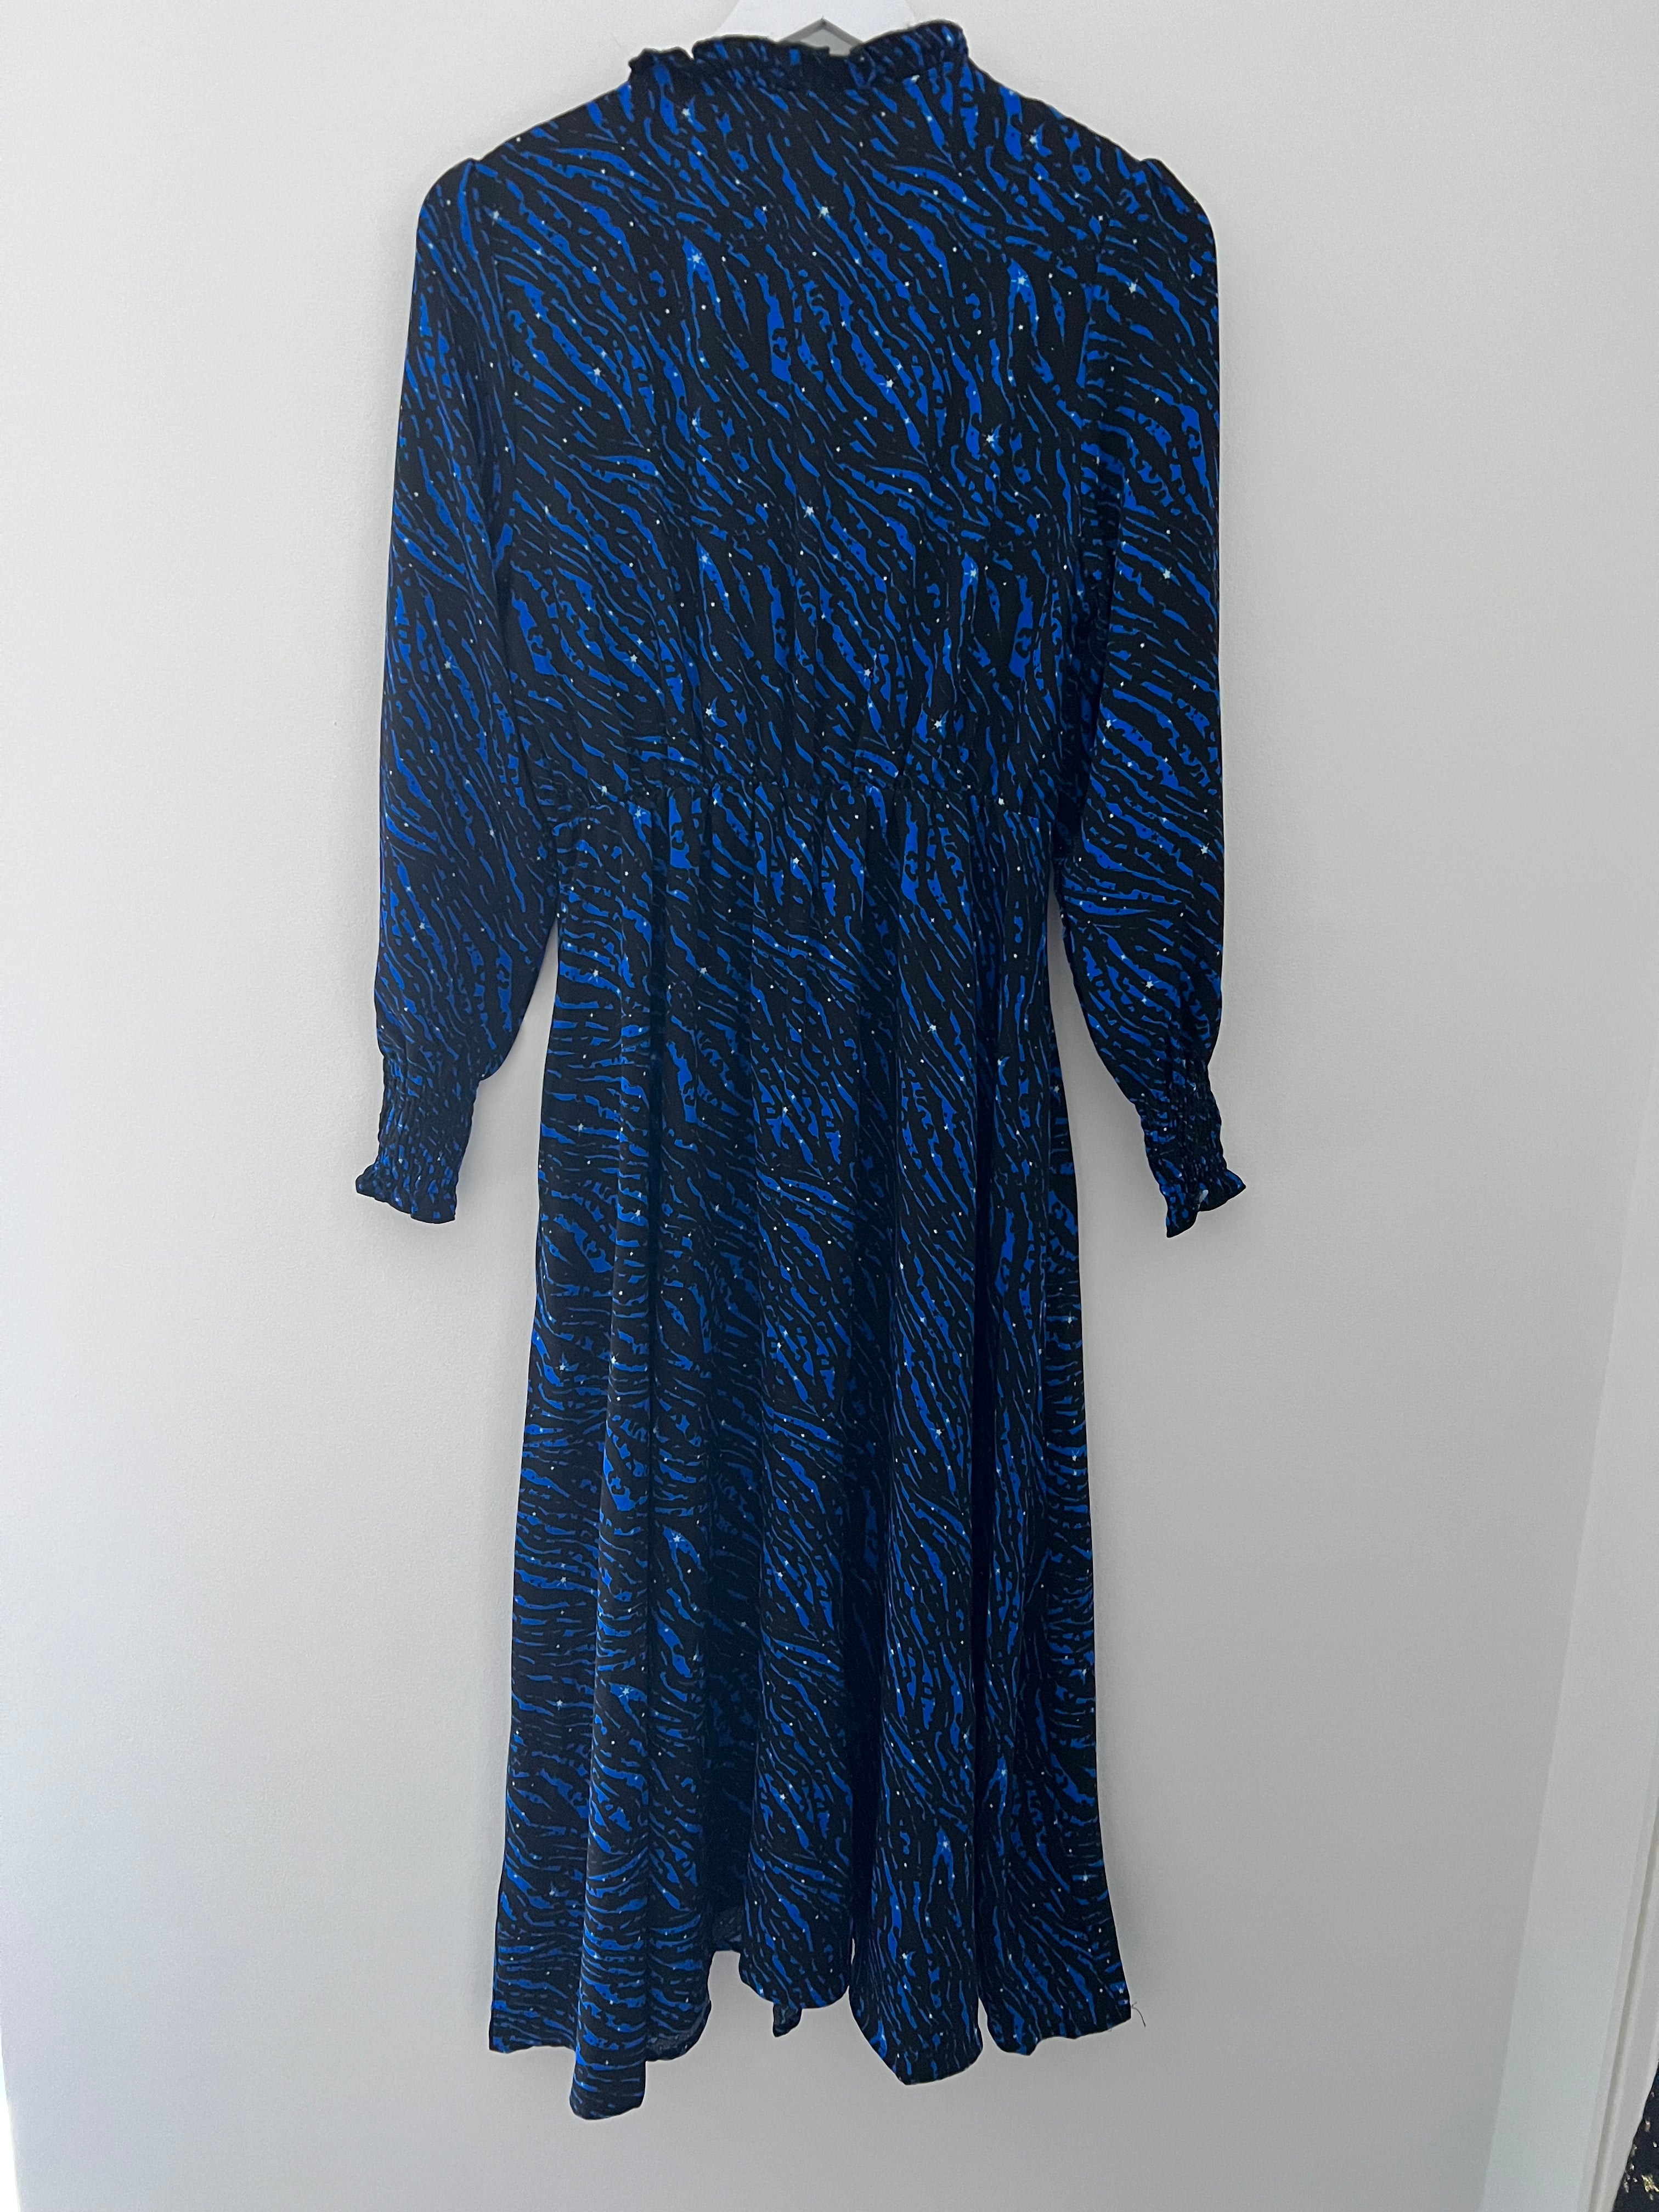 Zebra Star Print Midi Dress in Cobalt Blue